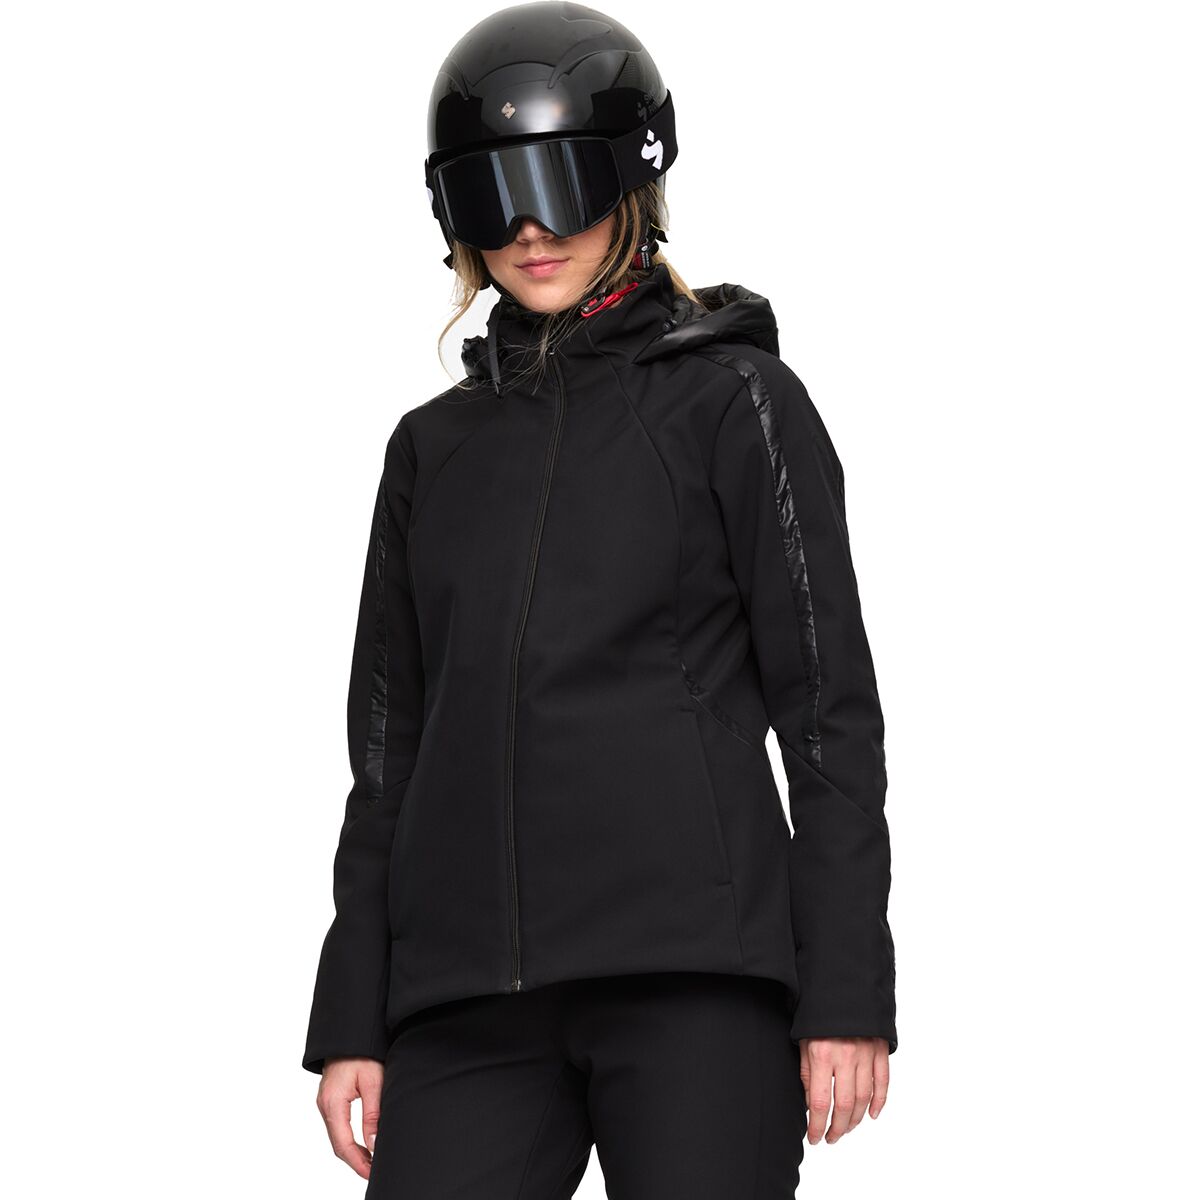 Kari Traa Benedicte Ski Jacket - Women's